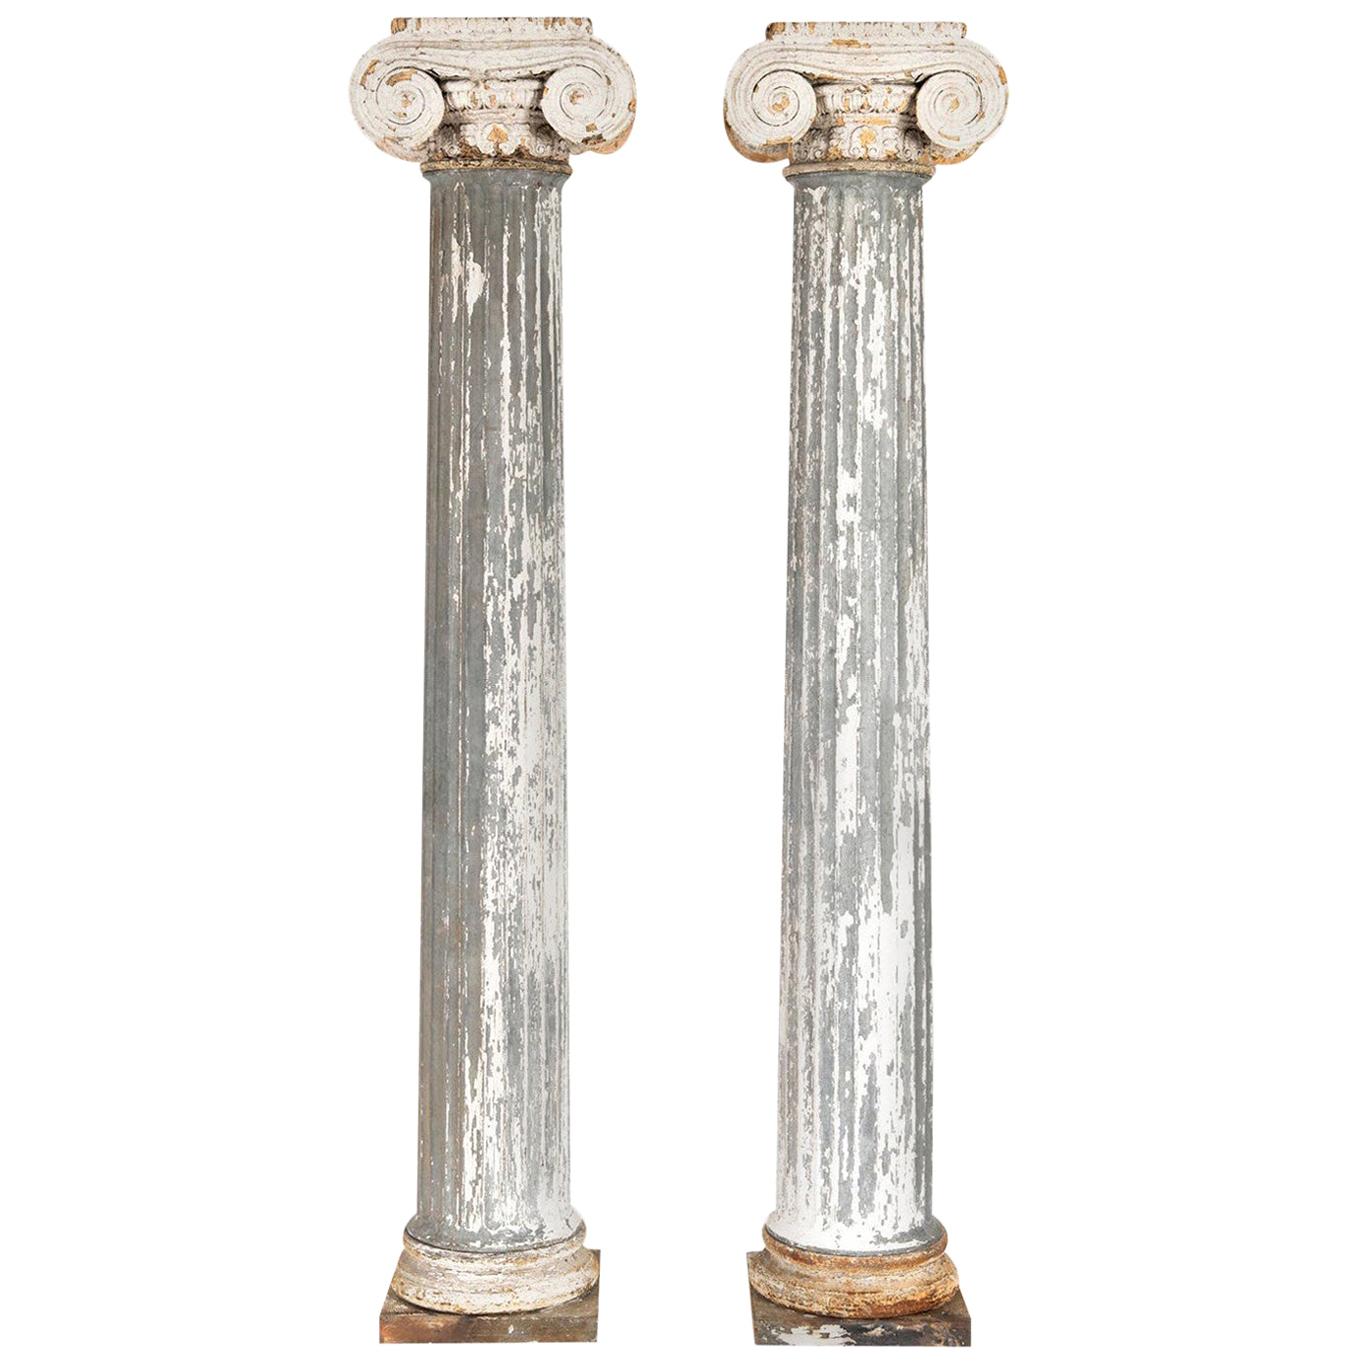 Pair of 19th Century Iron Zinc and Terracotta Ionic Capital Columns